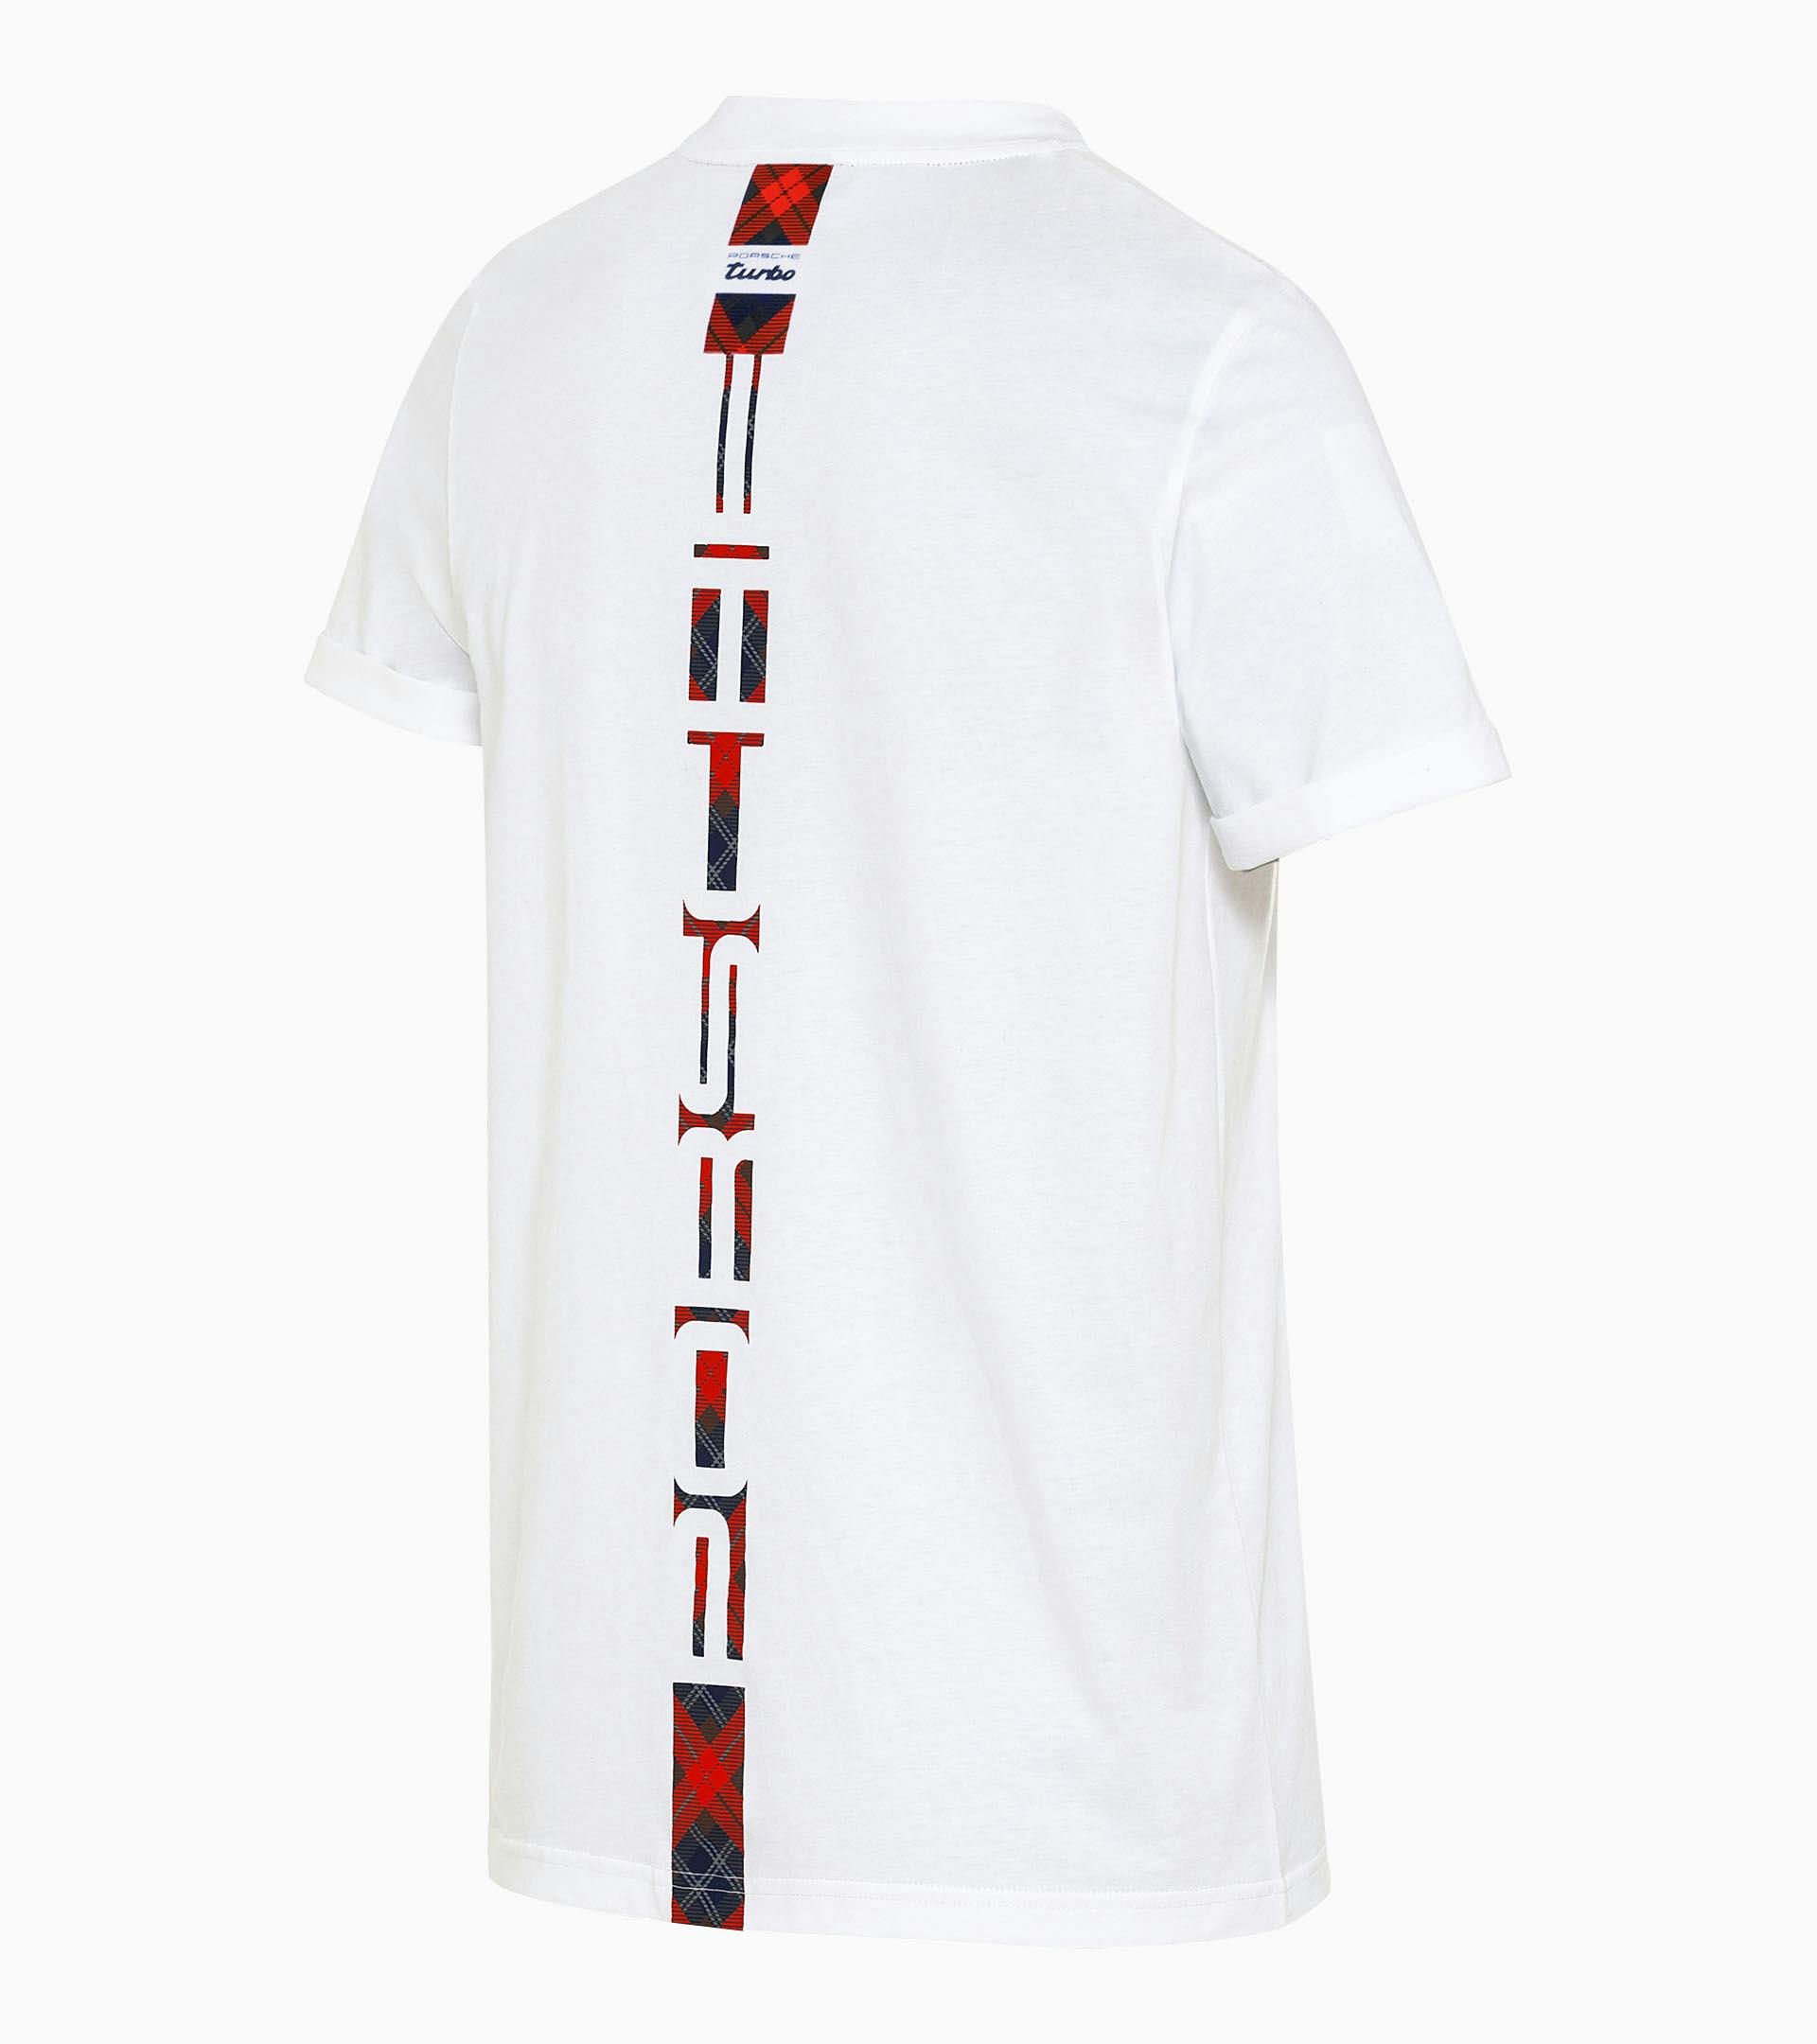 Camiseta unisex – Turbo No. 1